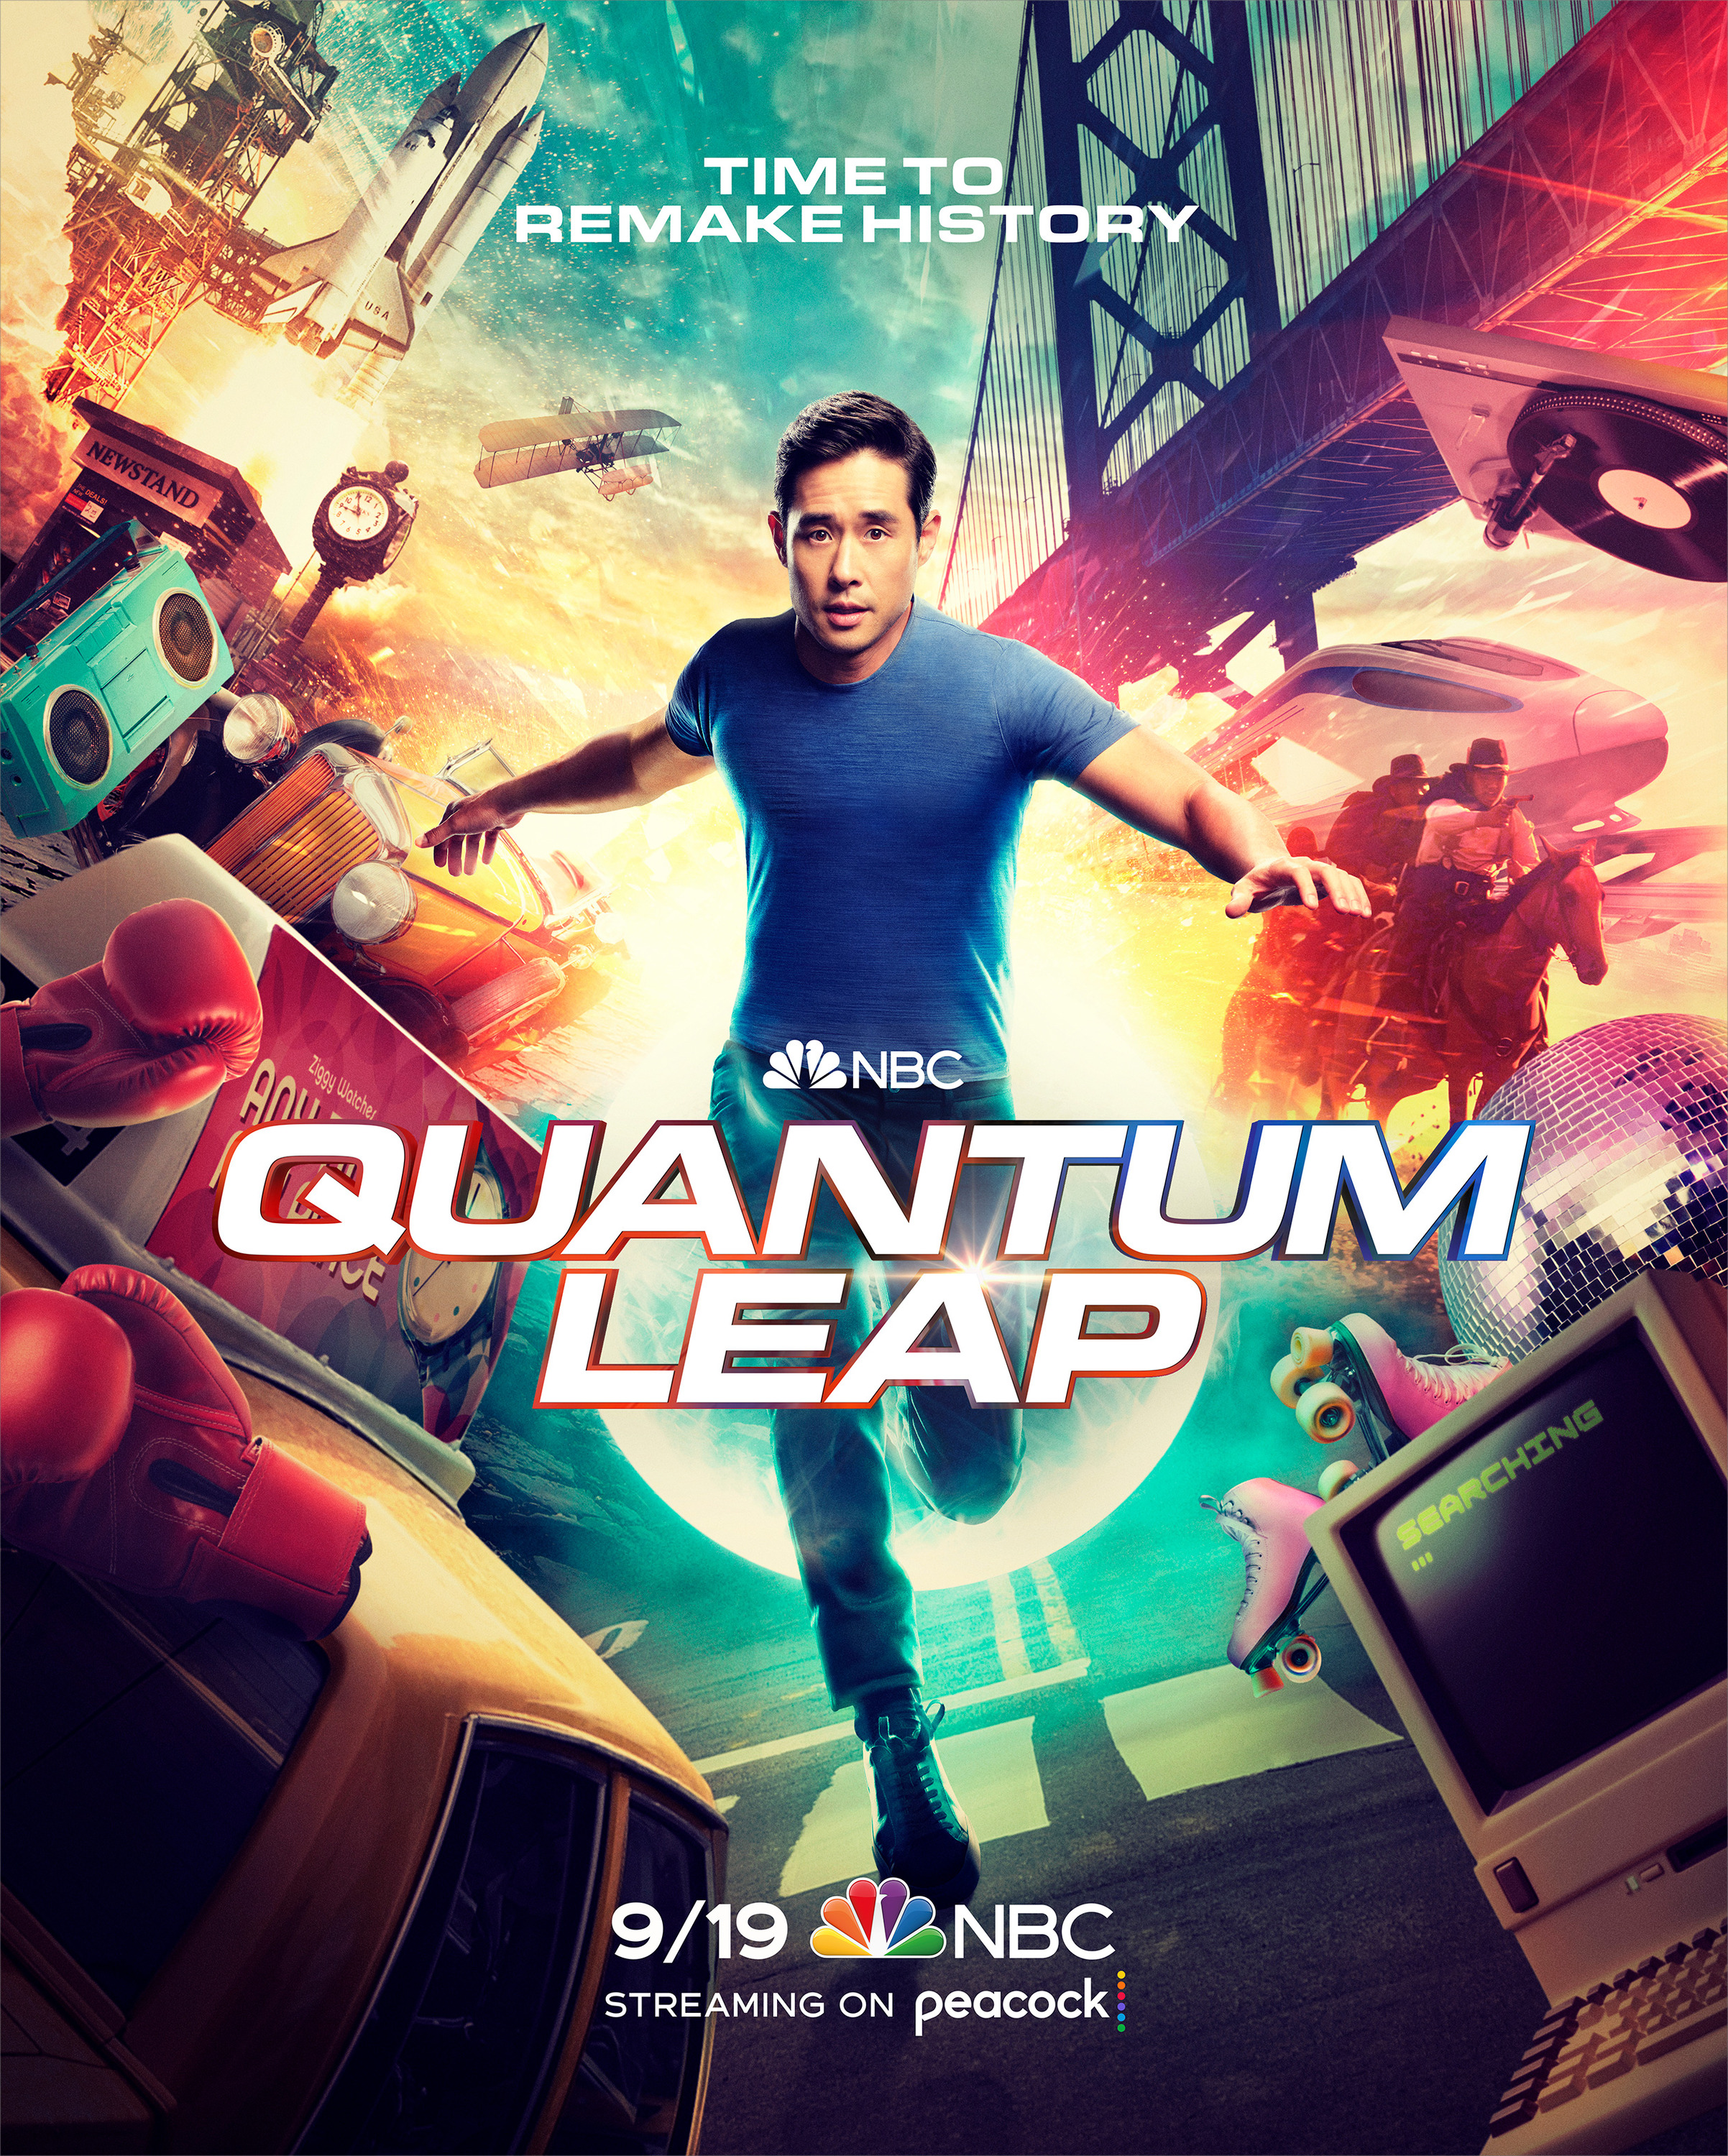 Mega Sized TV Poster Image for Quantum Leap 